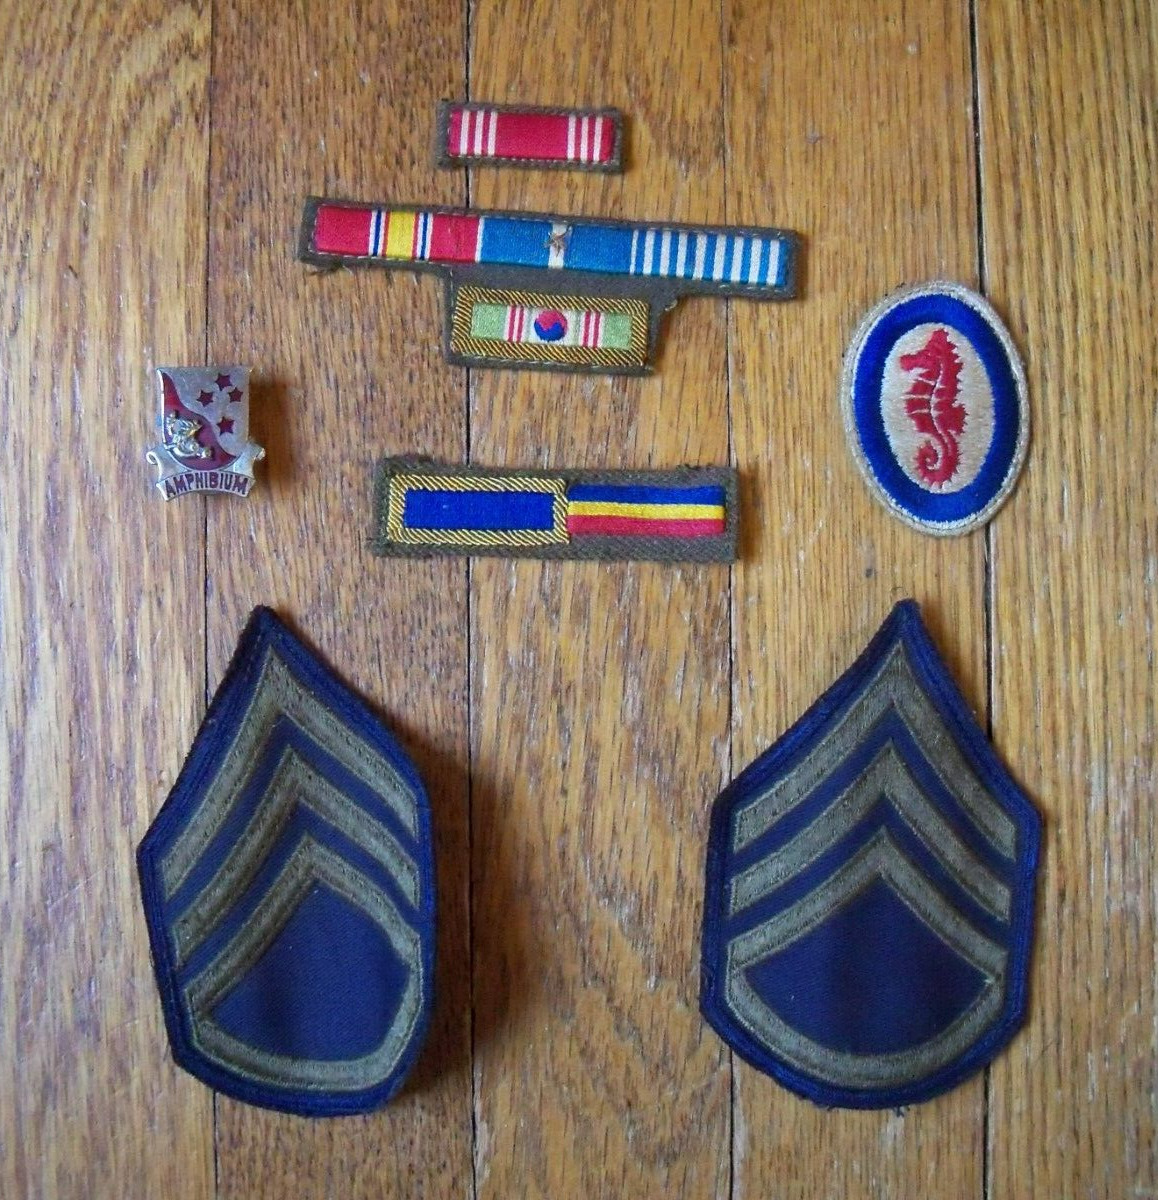 WW2 - US Army Hand Sewn Ribbon Bars - Uniform Rank & Unit Patches - Korea